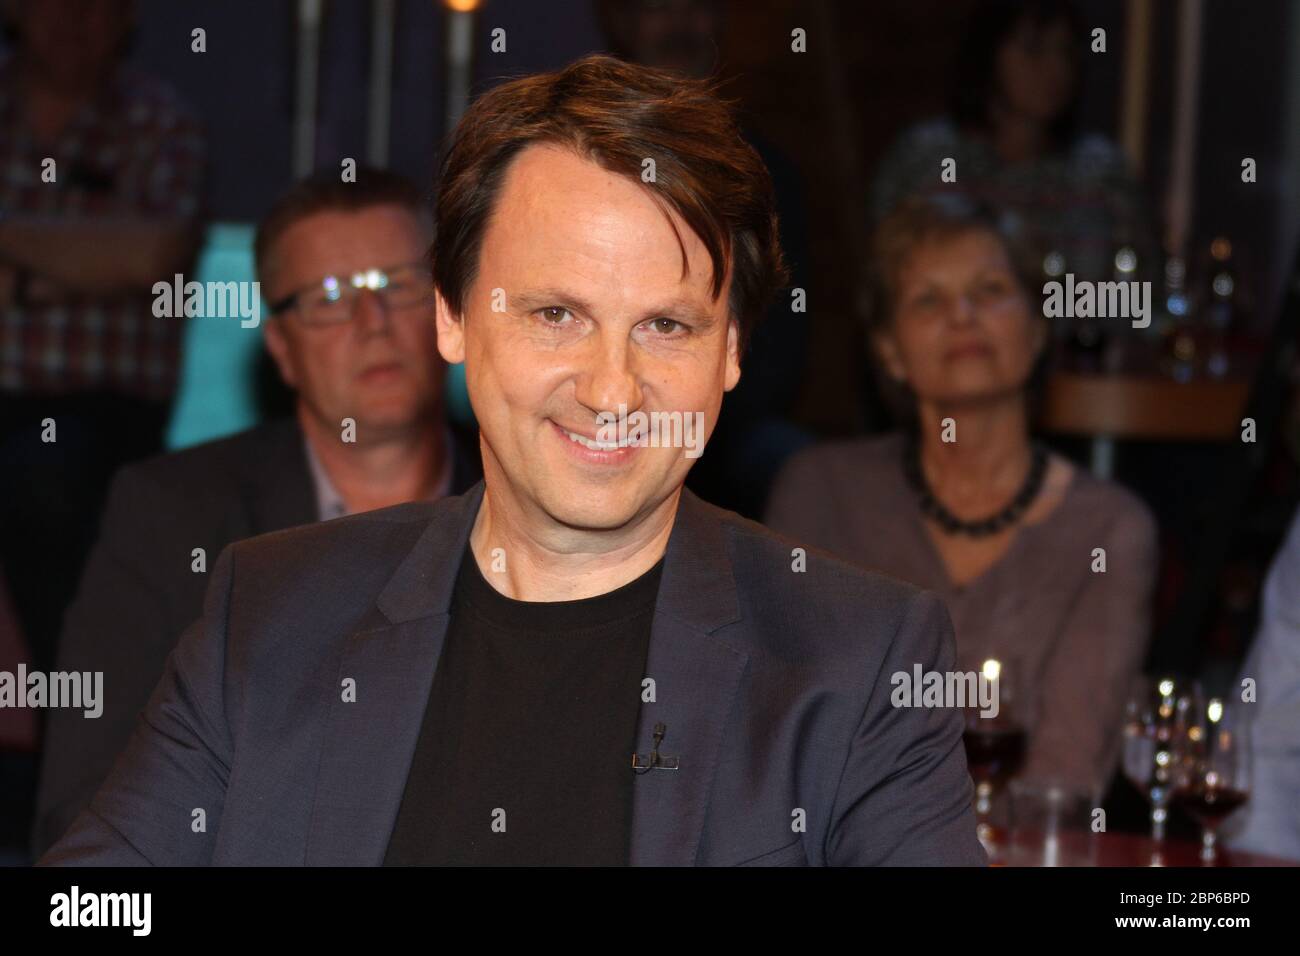 Sebastian Schnoy,NDR talk show,10.05.2019,Hamburg/SPERRFRIST 10.05.2019 BIS TO OF THE OUT 23:59!!!! Stock Photo